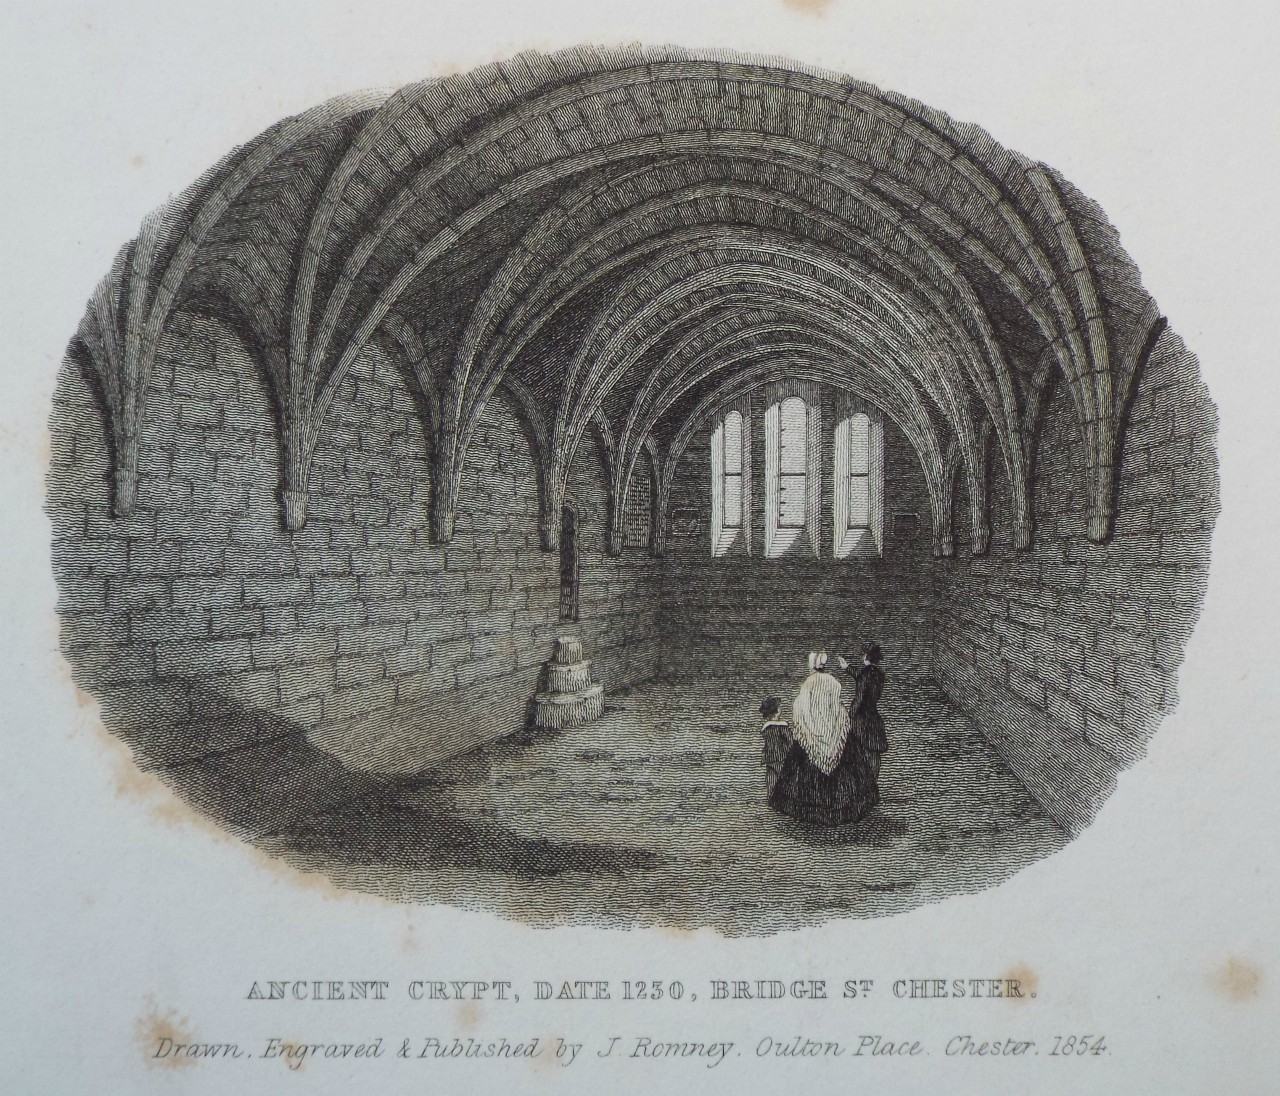 Print - Ancient Crypt, Date 1230, Bridge St. Chester. - Romney